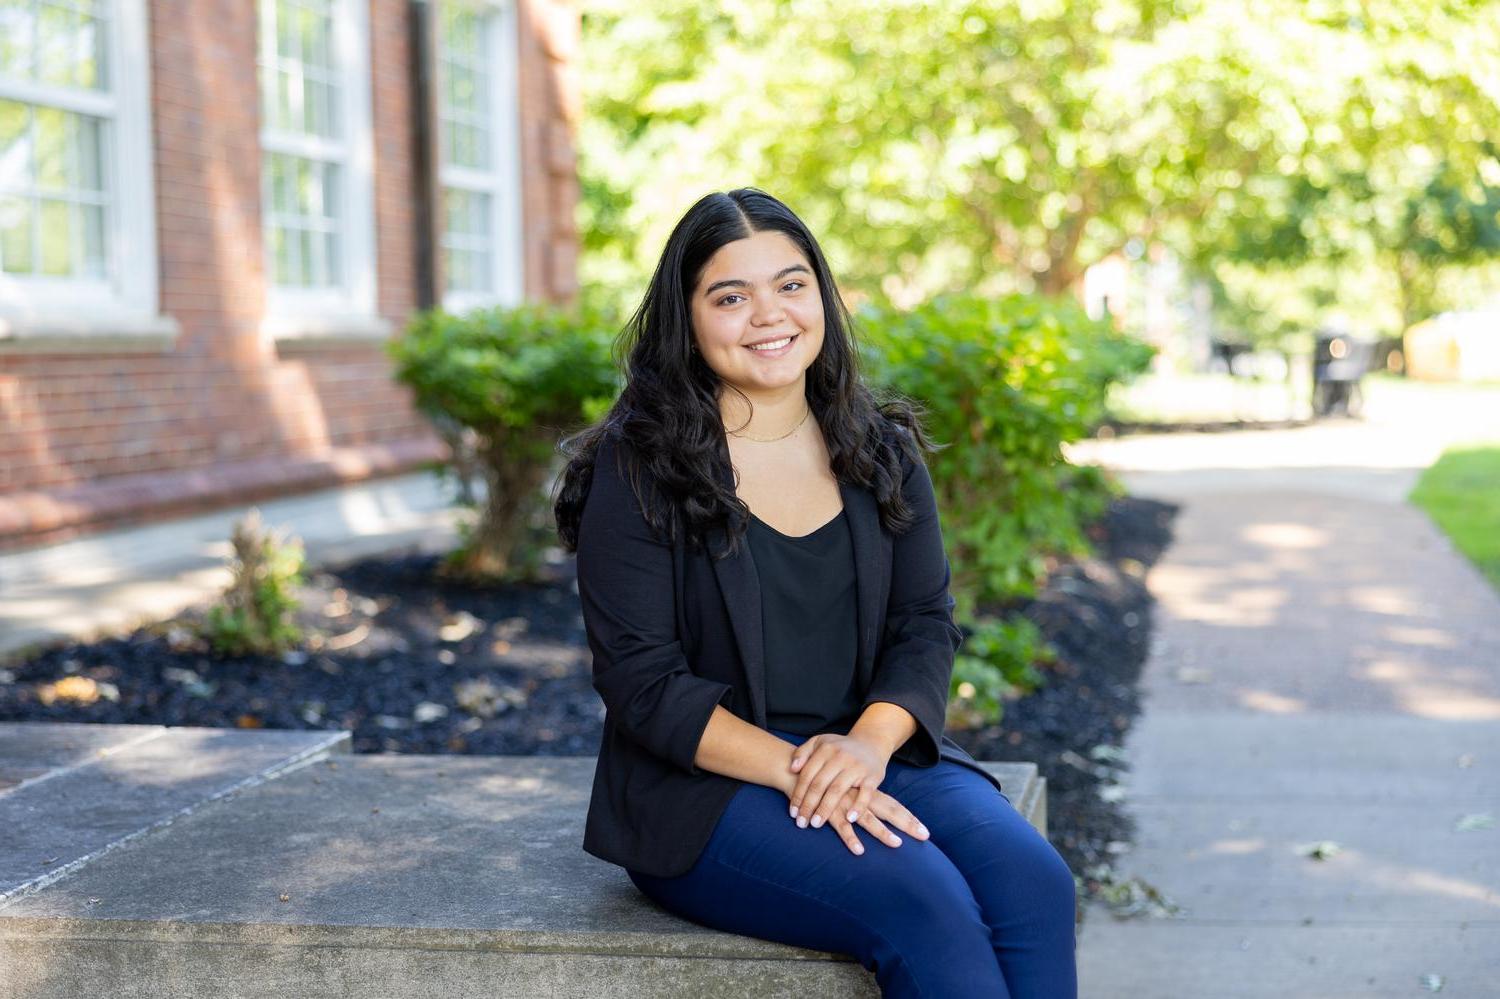 365bet finance student Lesly Moreno pursues banking career despite challenges